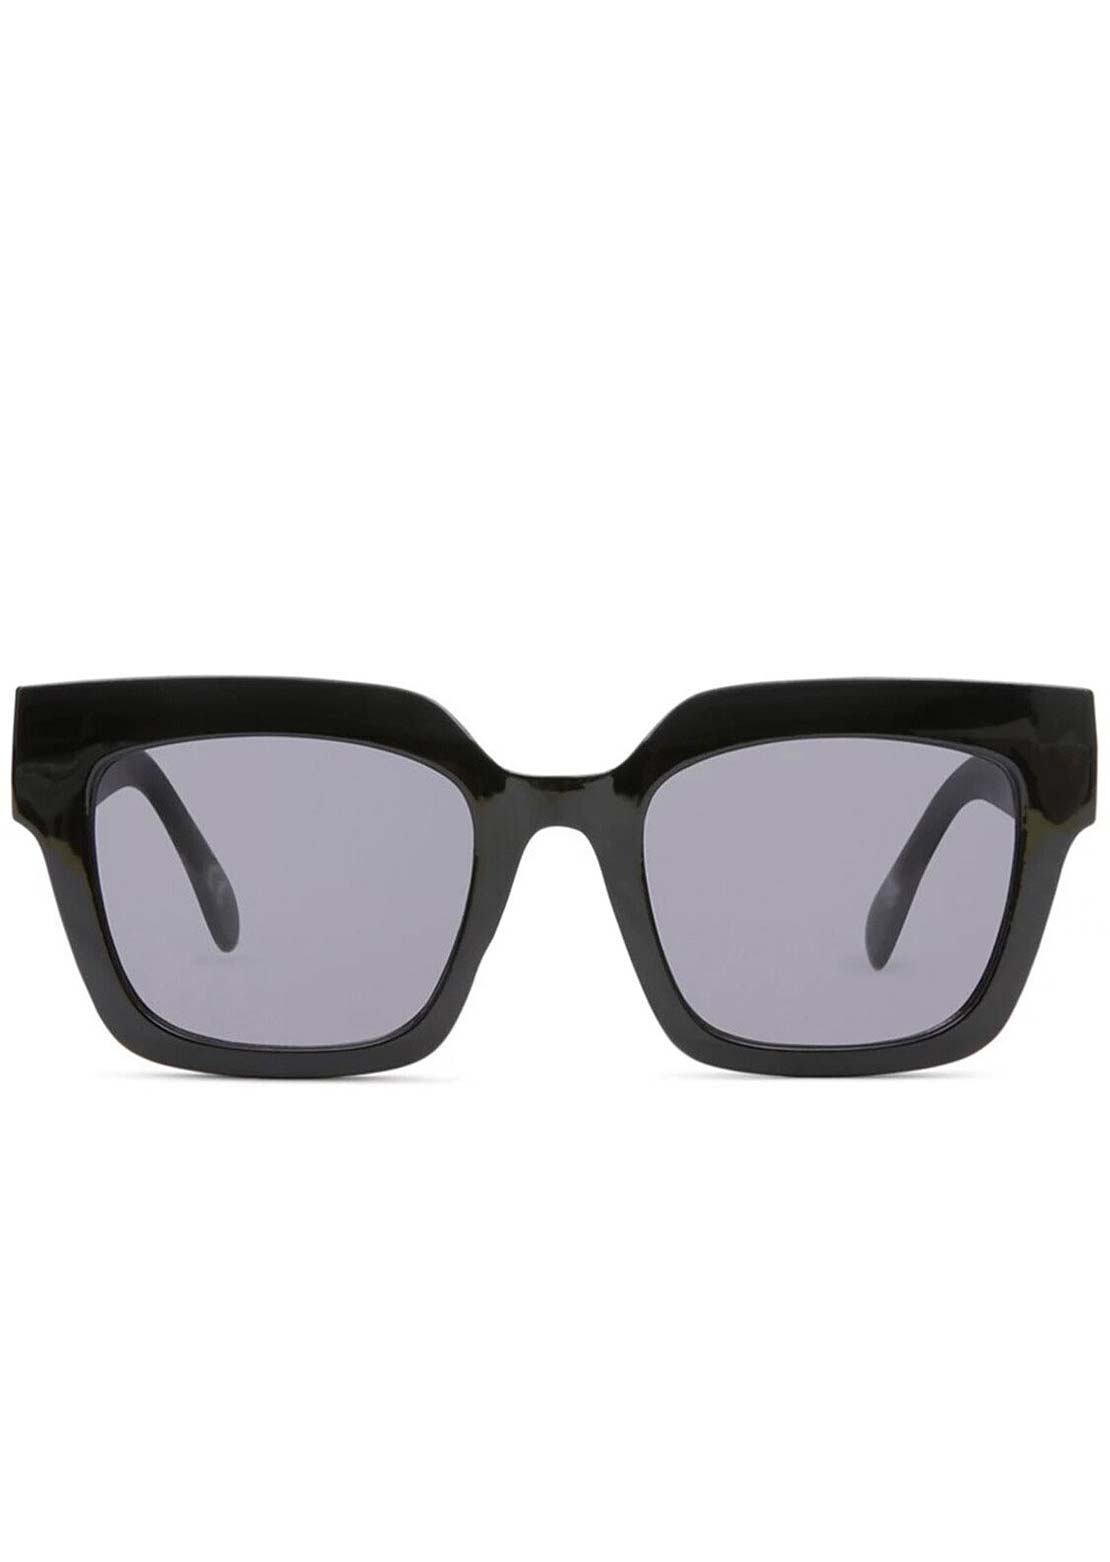 Vans Unisex Belden Shades Sunglasses Black